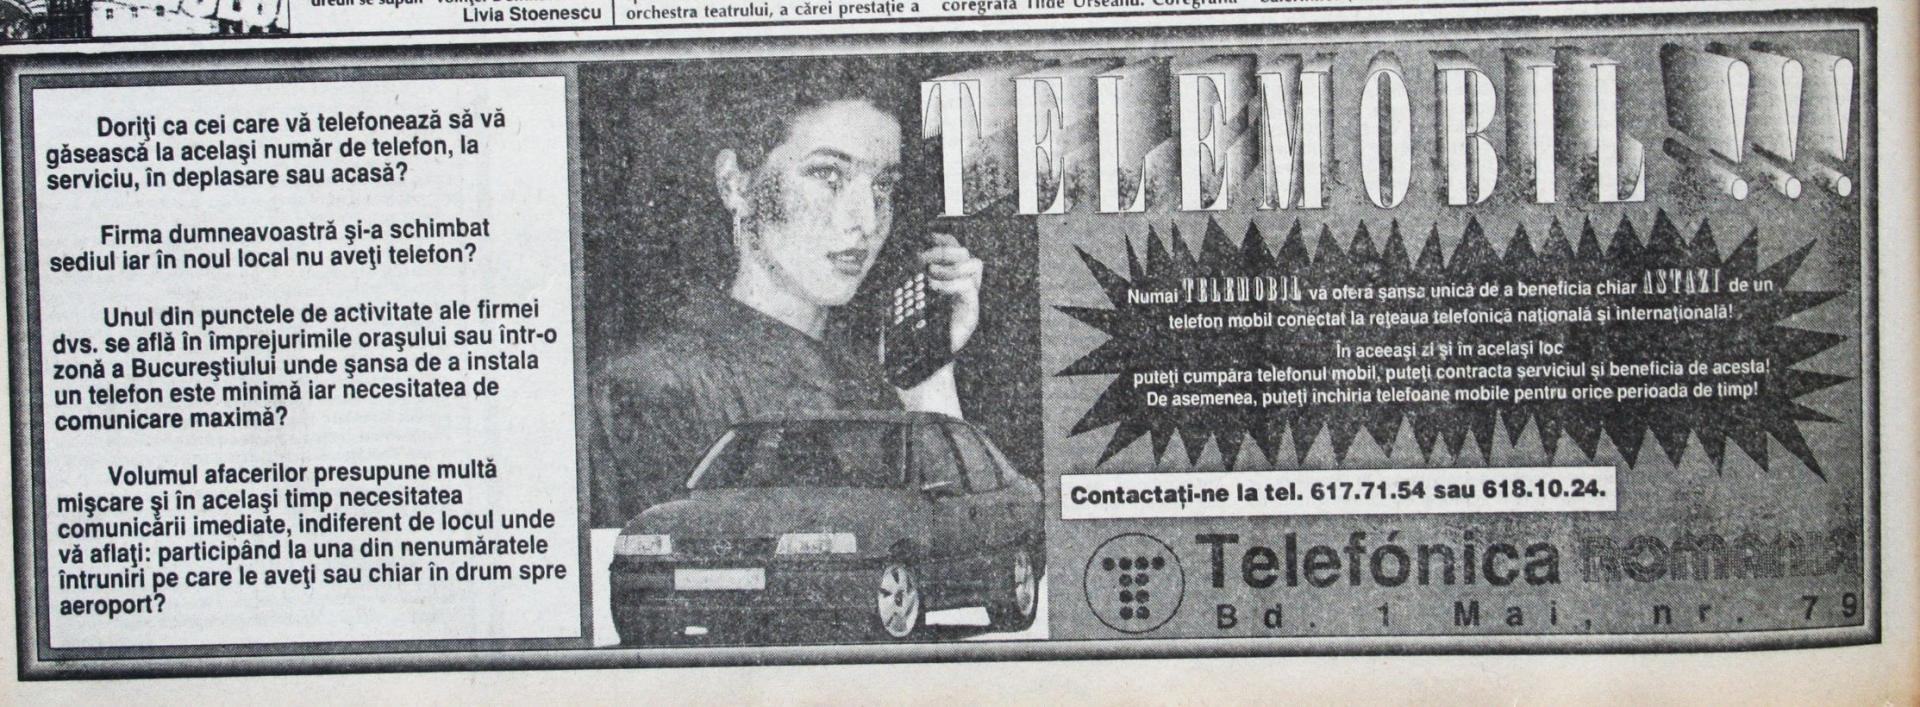 Romania Libera nr. 1138 V 24 dec 1993 pg. 2 reclama la Telefonica Romania Telemobil